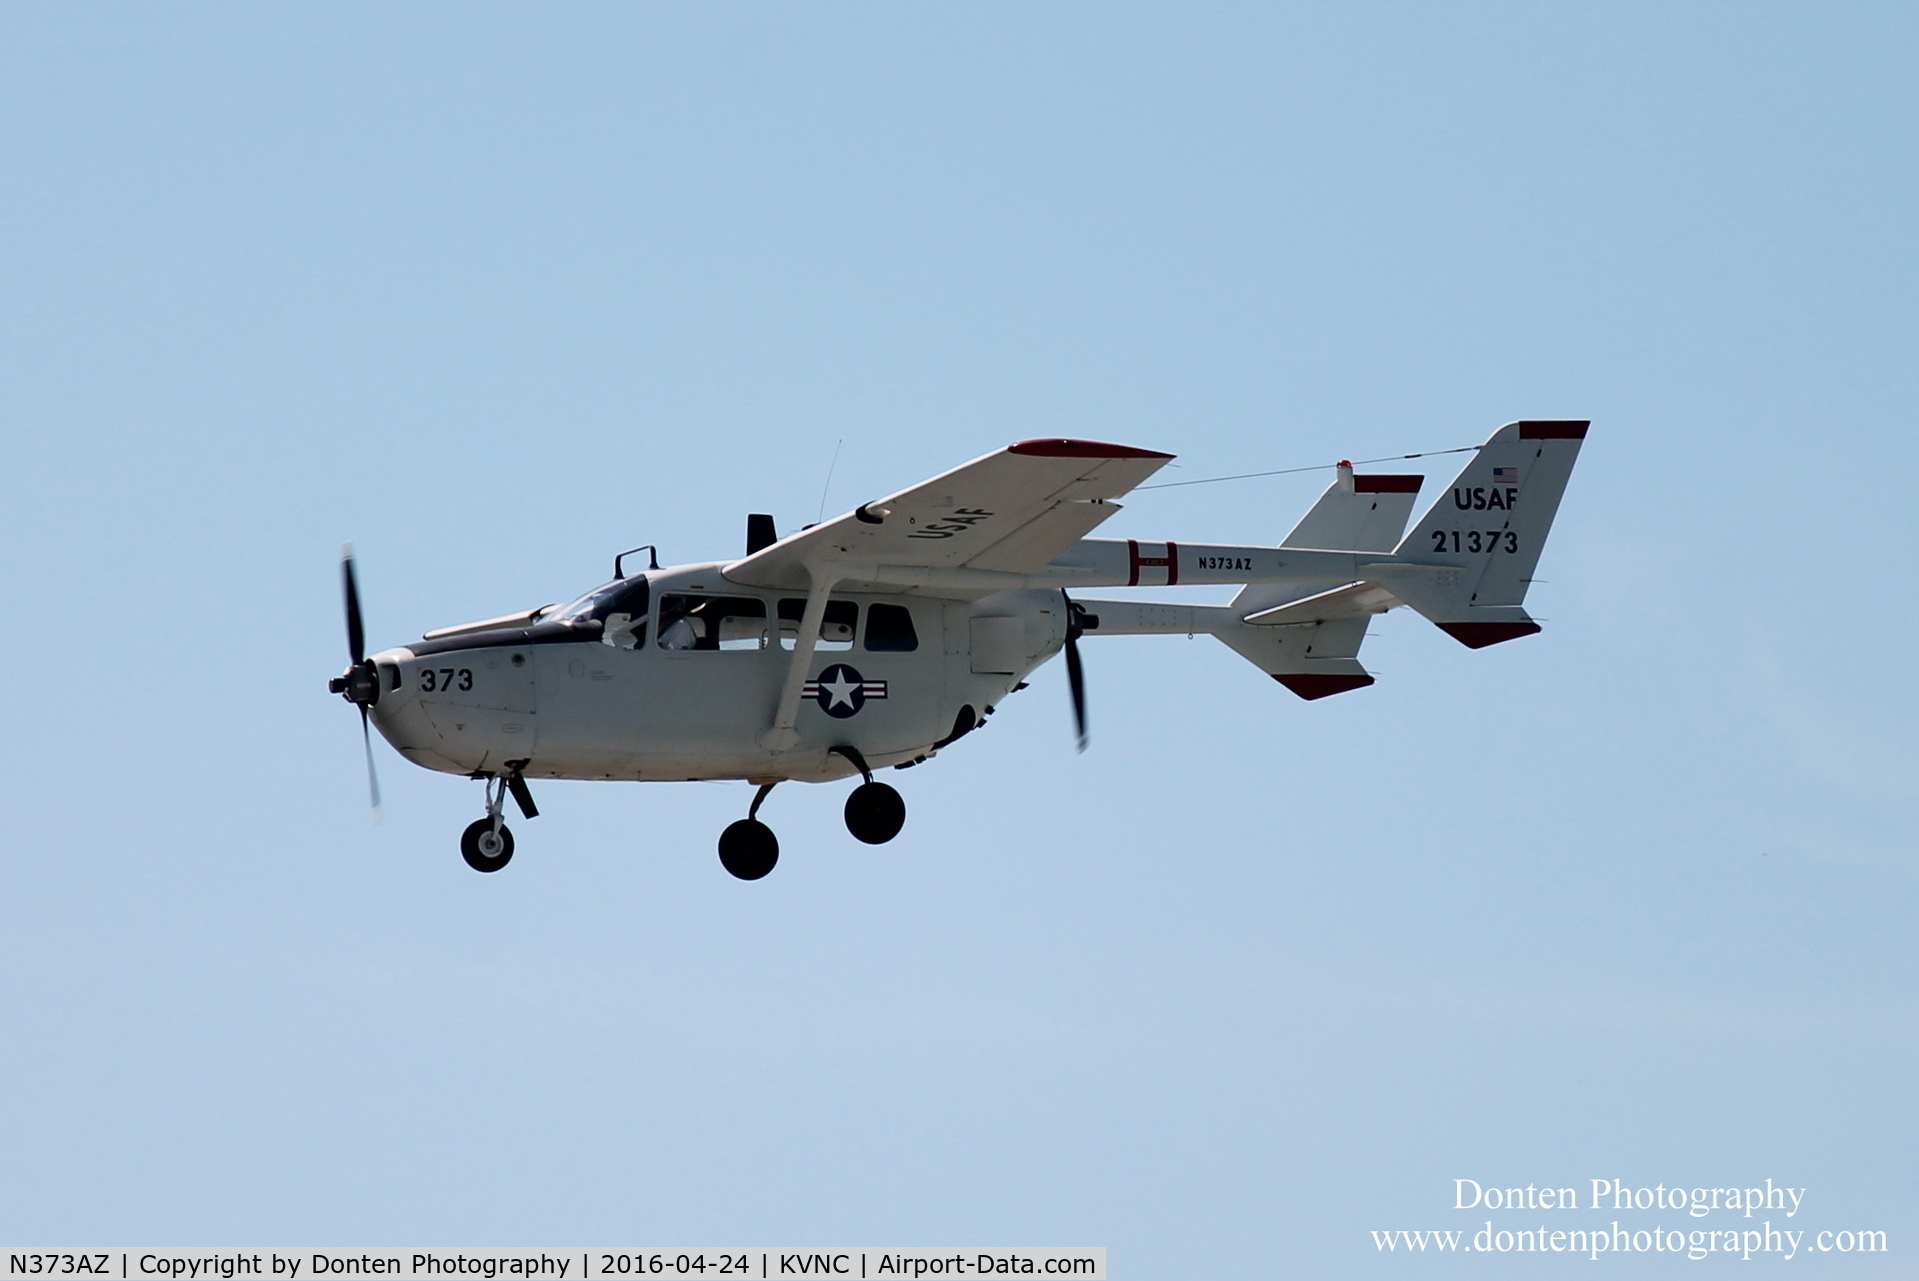 N373AZ, 1967 Cessna M337B (O-2A) Super Skymaster C/N 337M-0079 (67-21373), O-2 Skymaster (N373AZ) arrives at Venice Municipal Airport